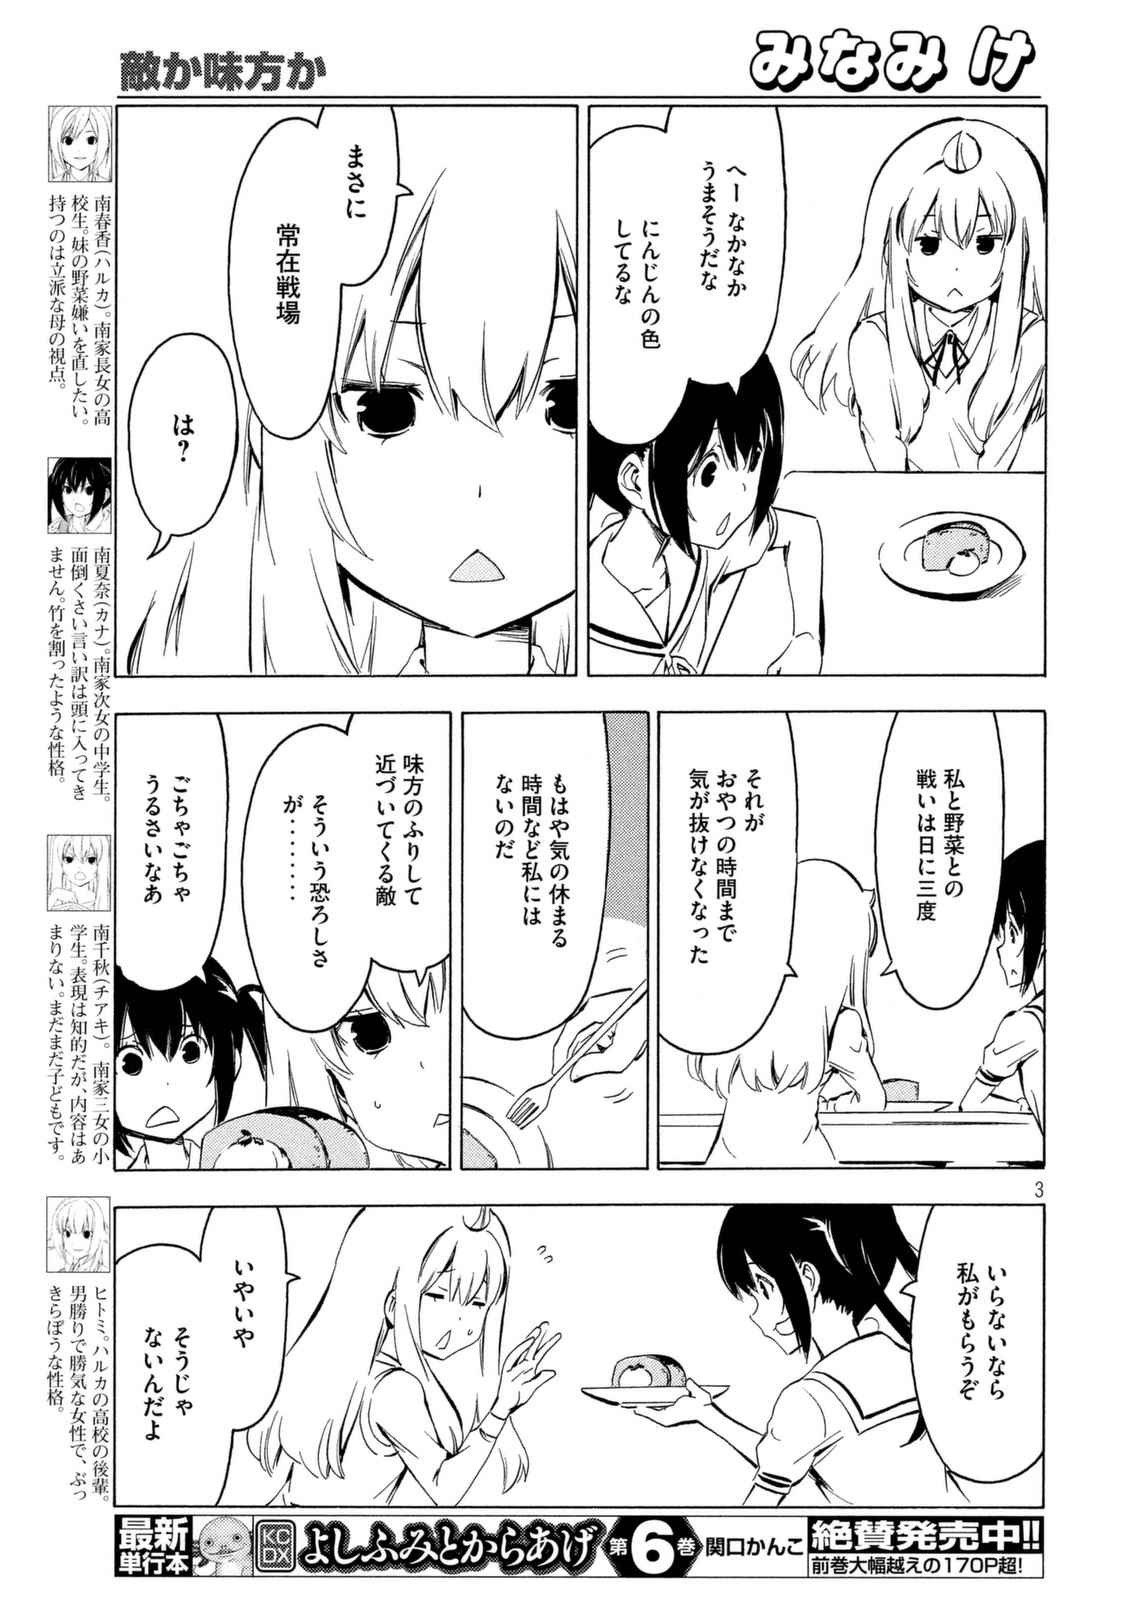 Minami-ke - Chapter 321 - Page 3